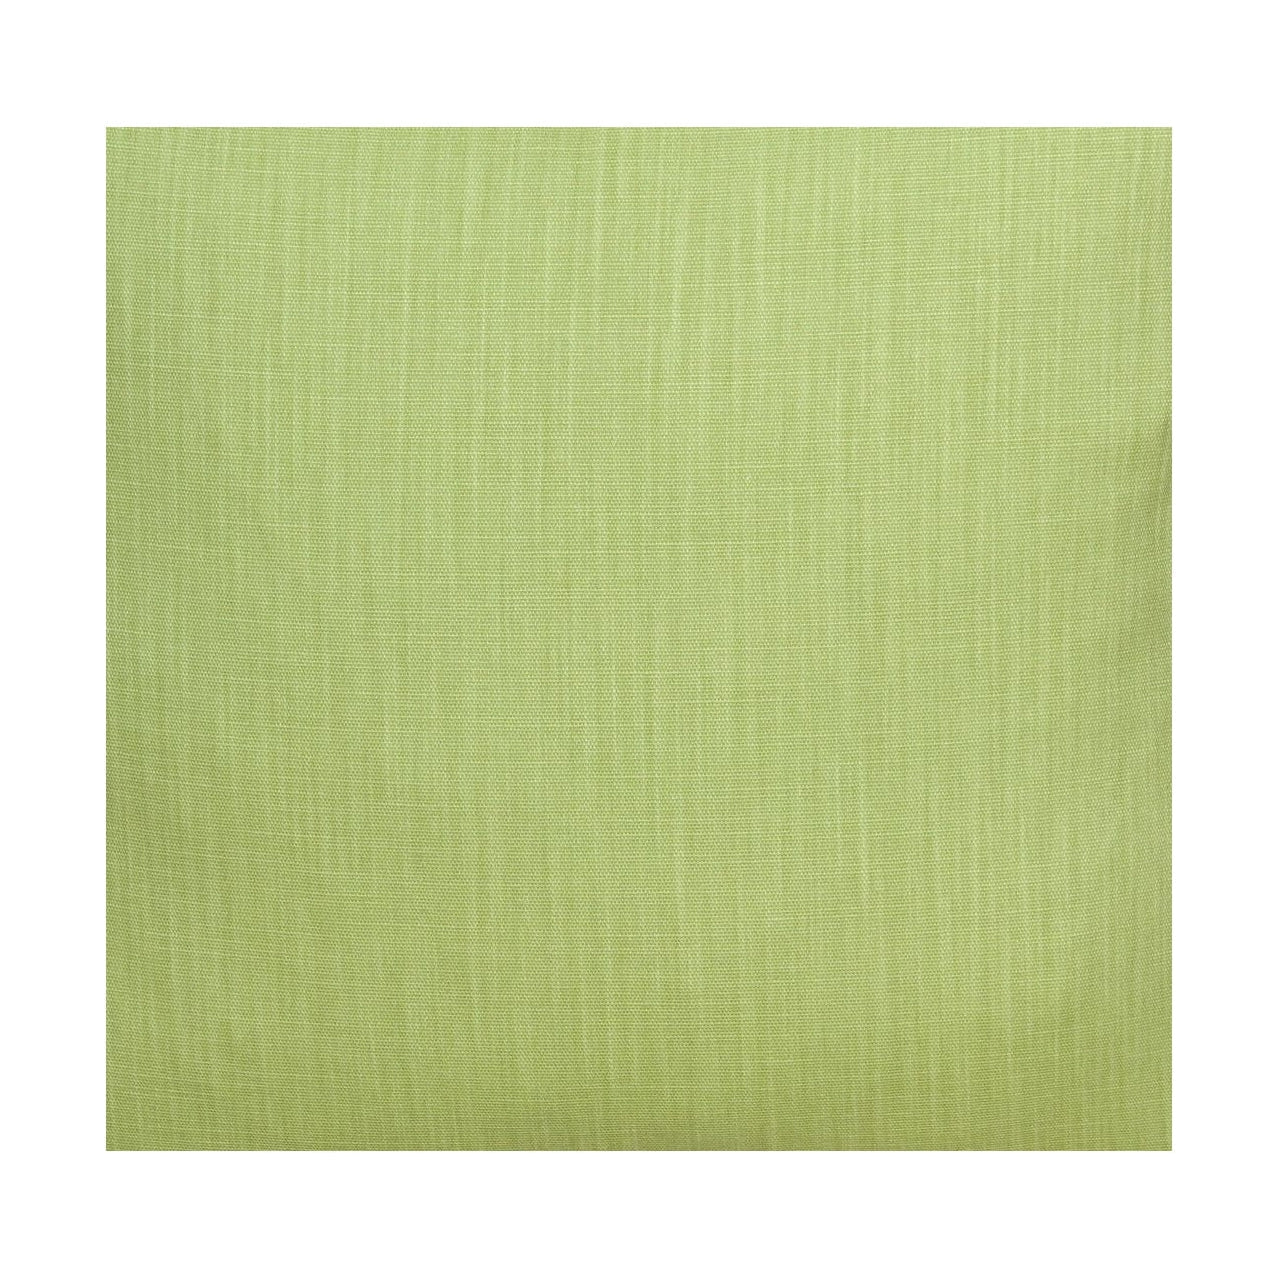 Larghezza del tessuto Spira Klotz 150 cm (prezzo per metro), verde chiaro